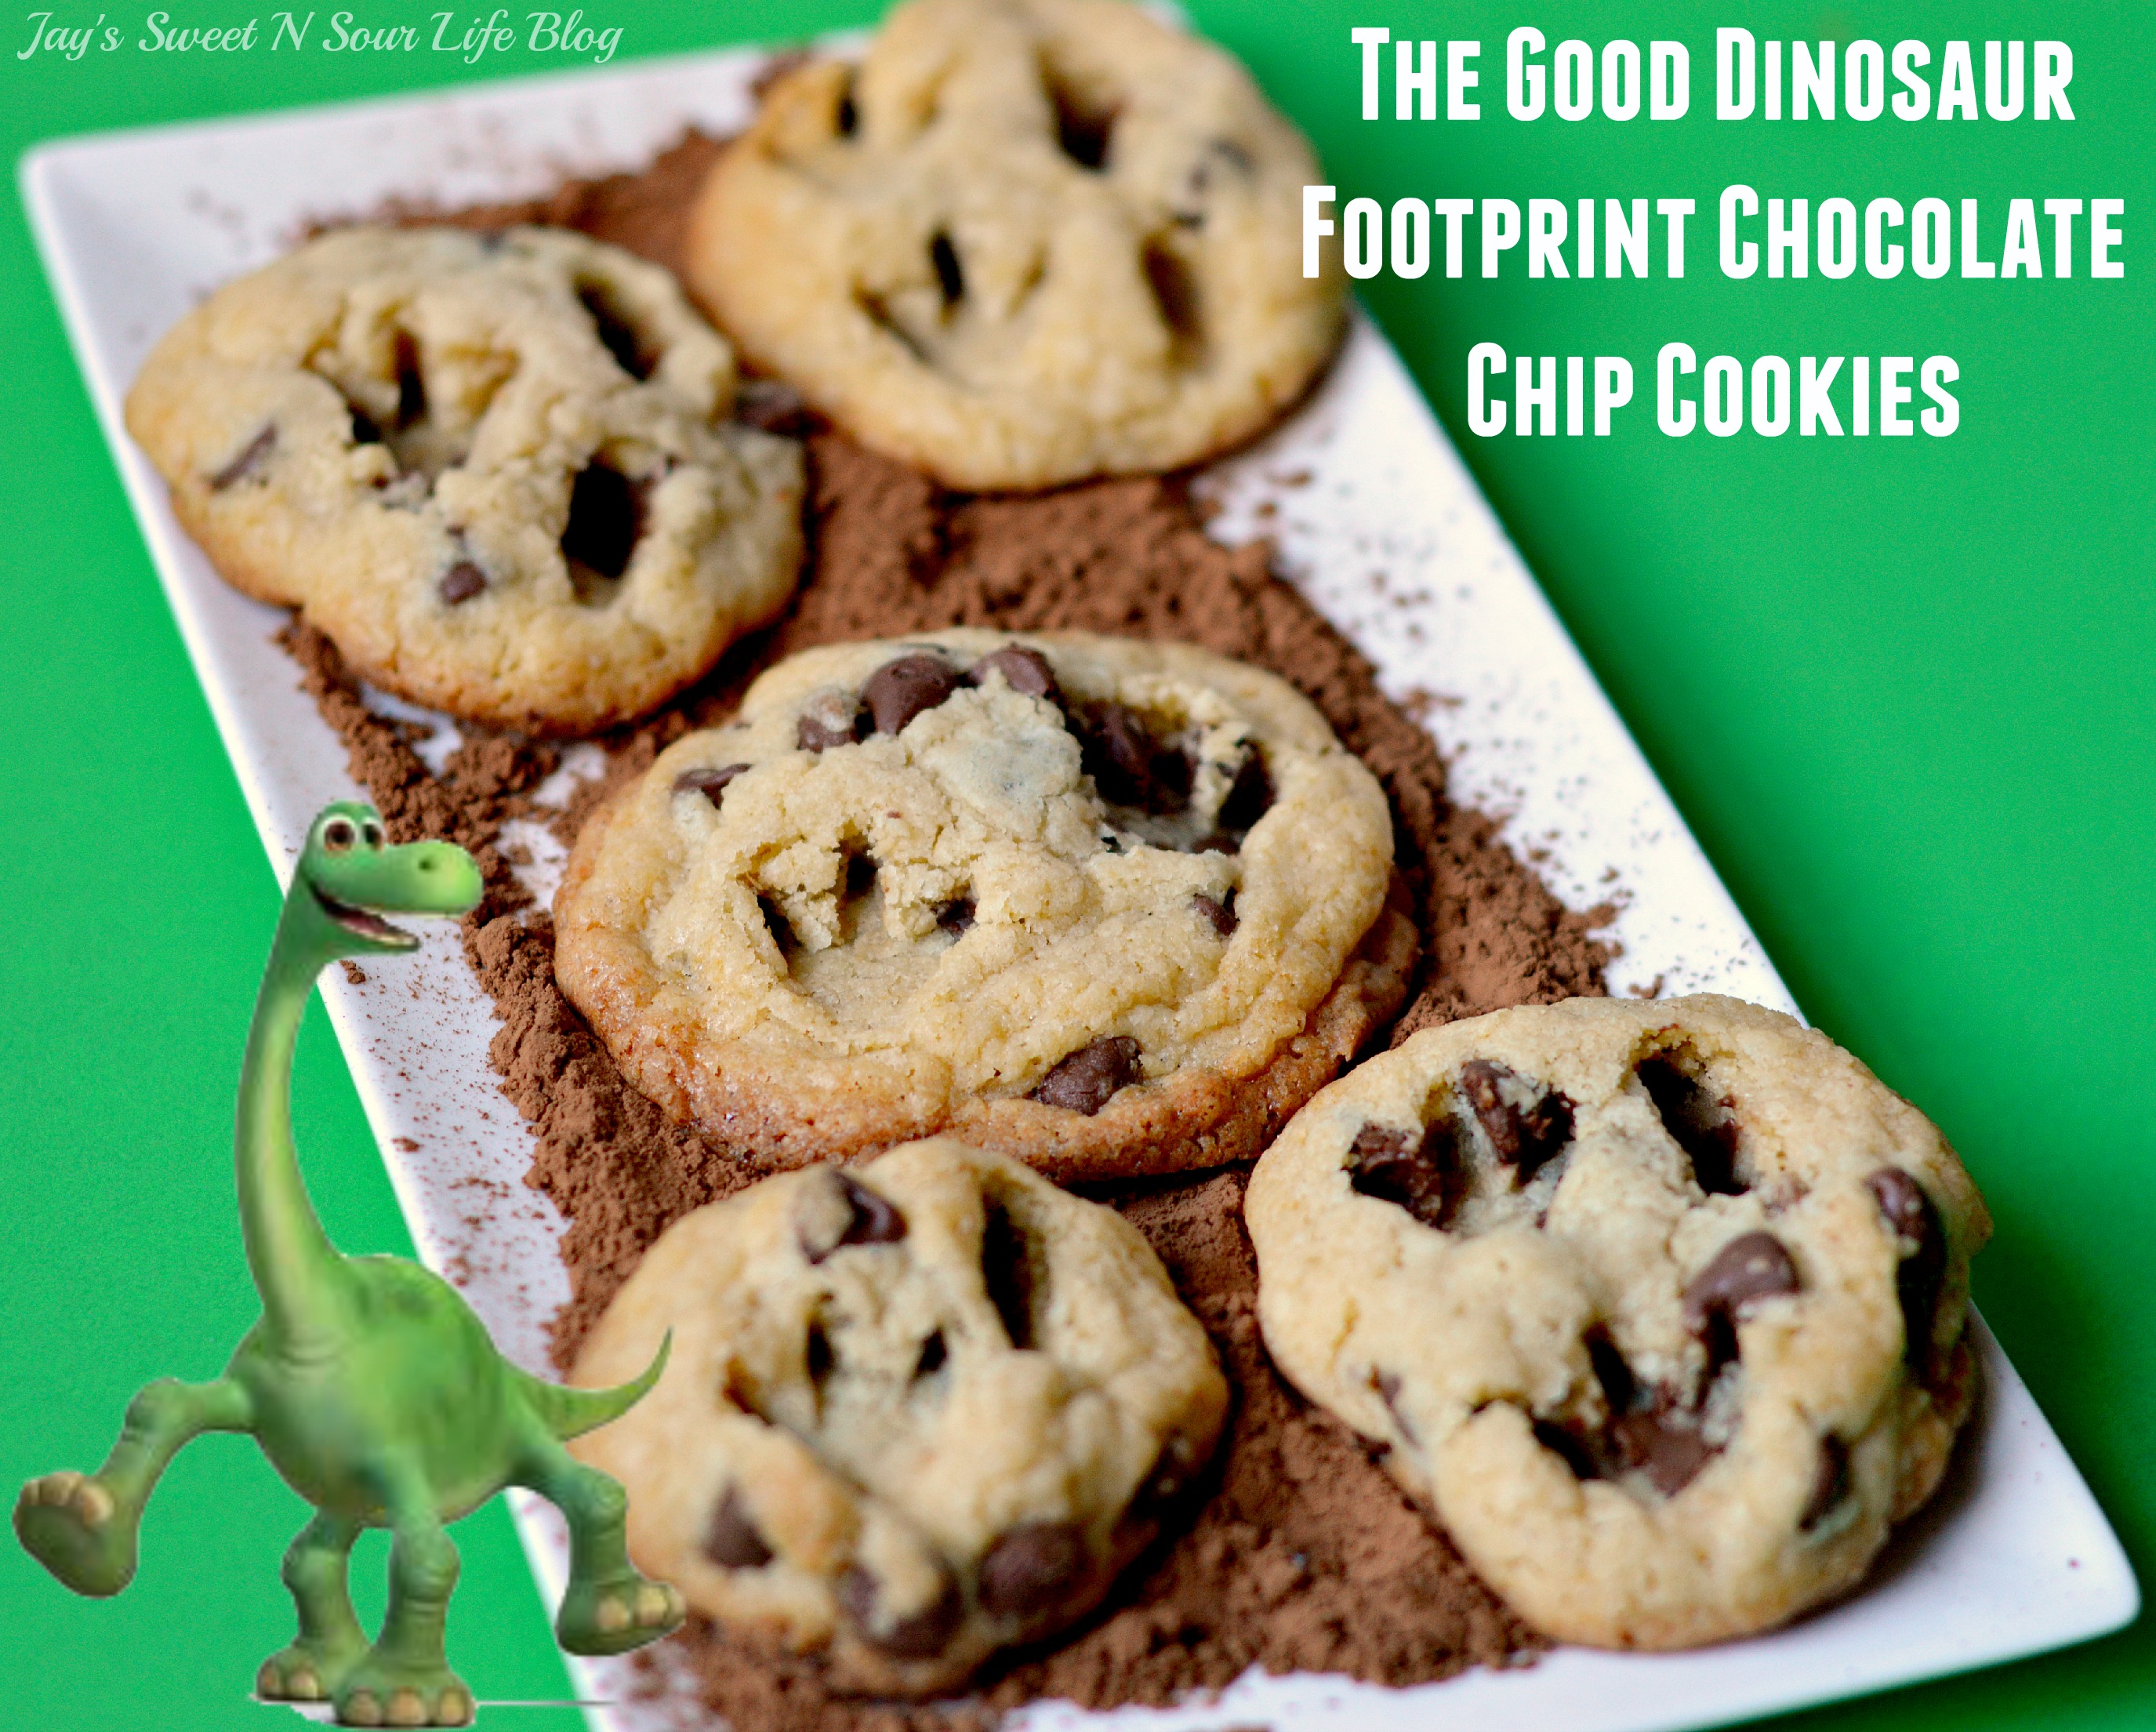 The Good Dinosaur Footprint Chocolate Chip Cookies